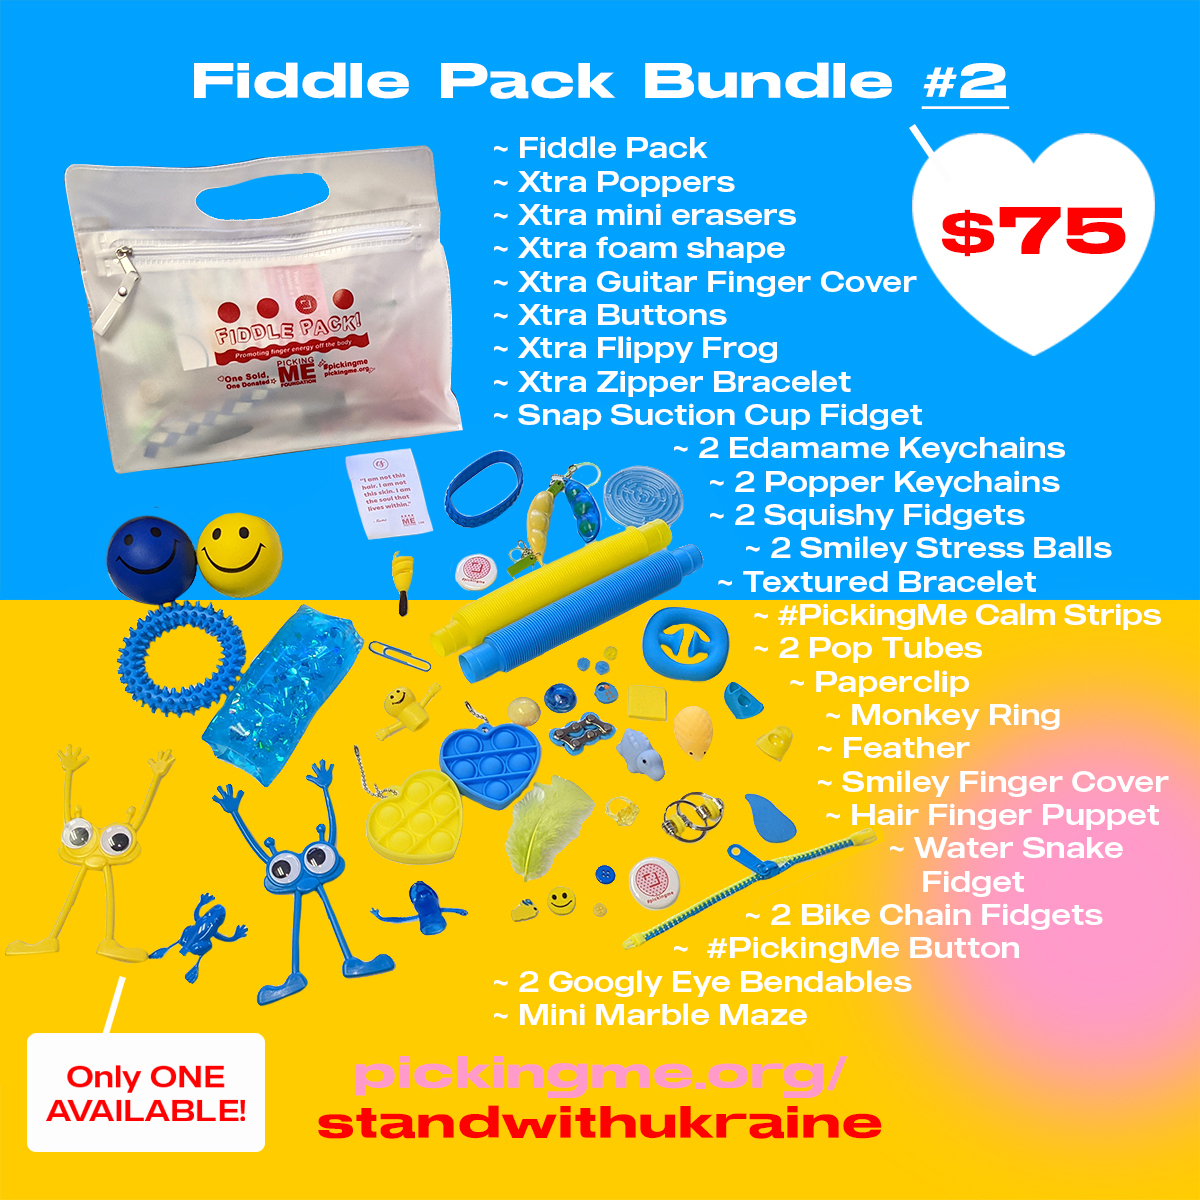 Fiddle Pack Bundle #2